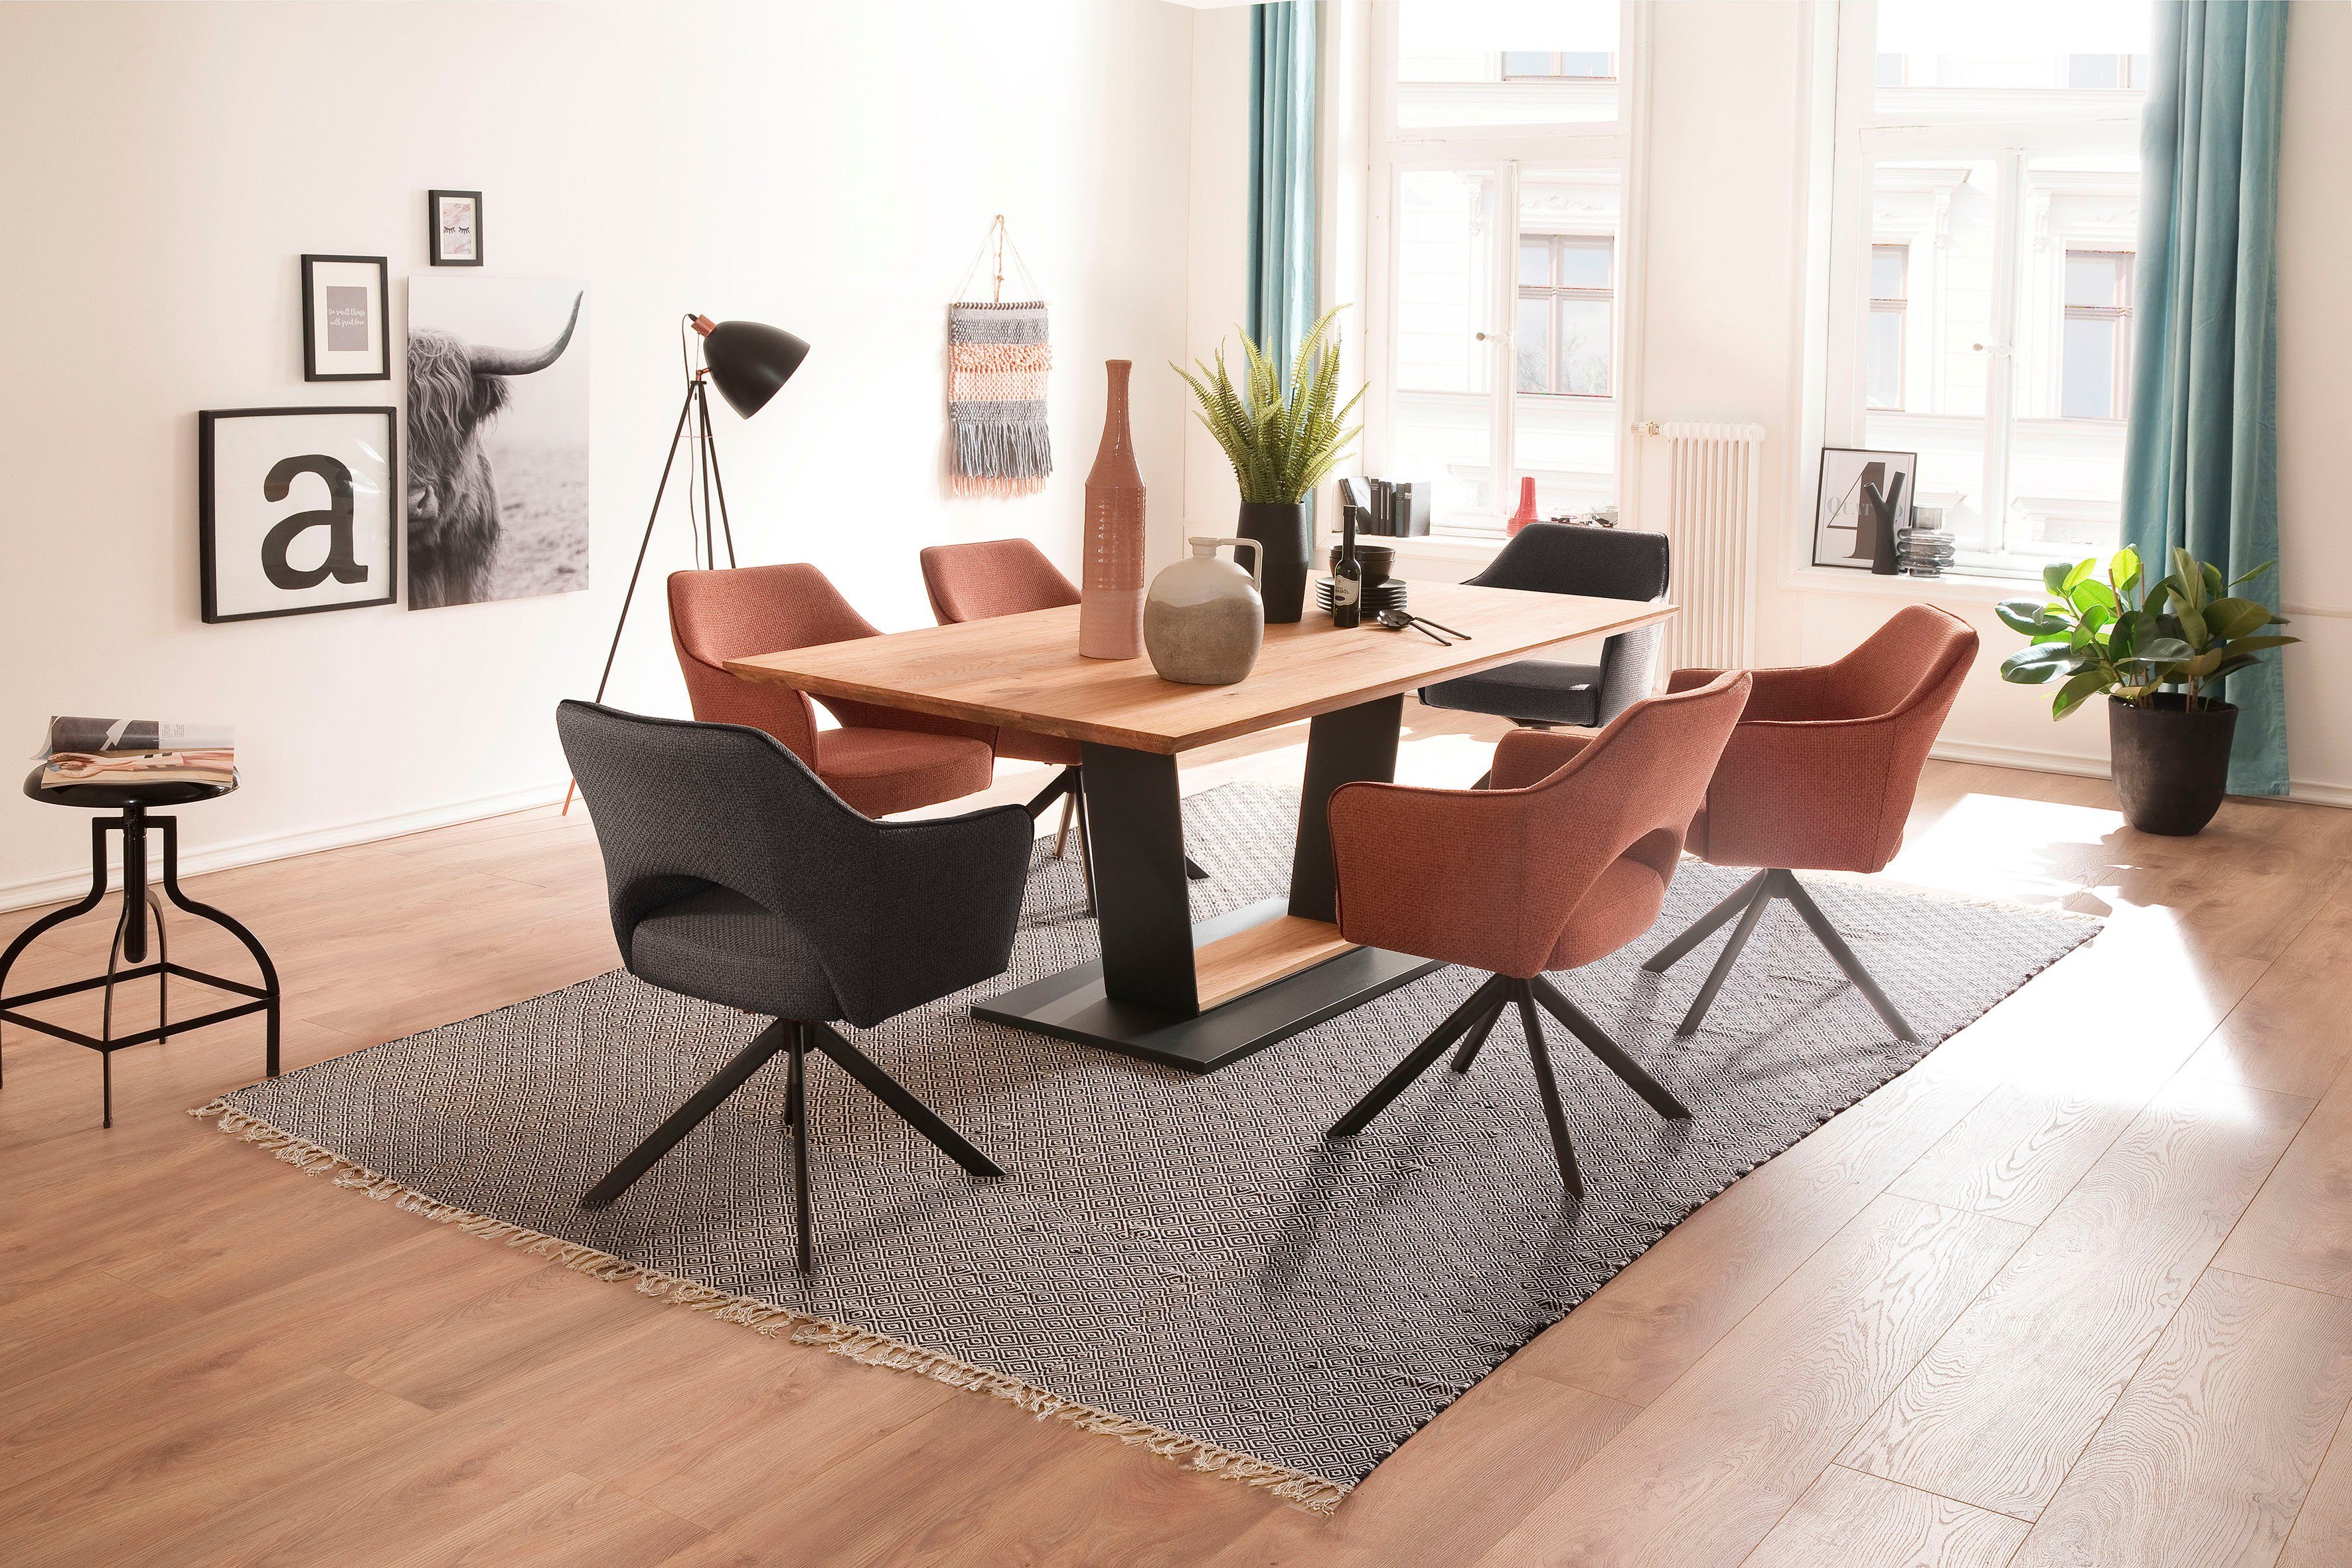 Metall (Set, mit schwarz 2 Nivellierung St), lackiert Tonala 180° MCA 4-Fußstuhl | drehbar matt furniture Rostbraun